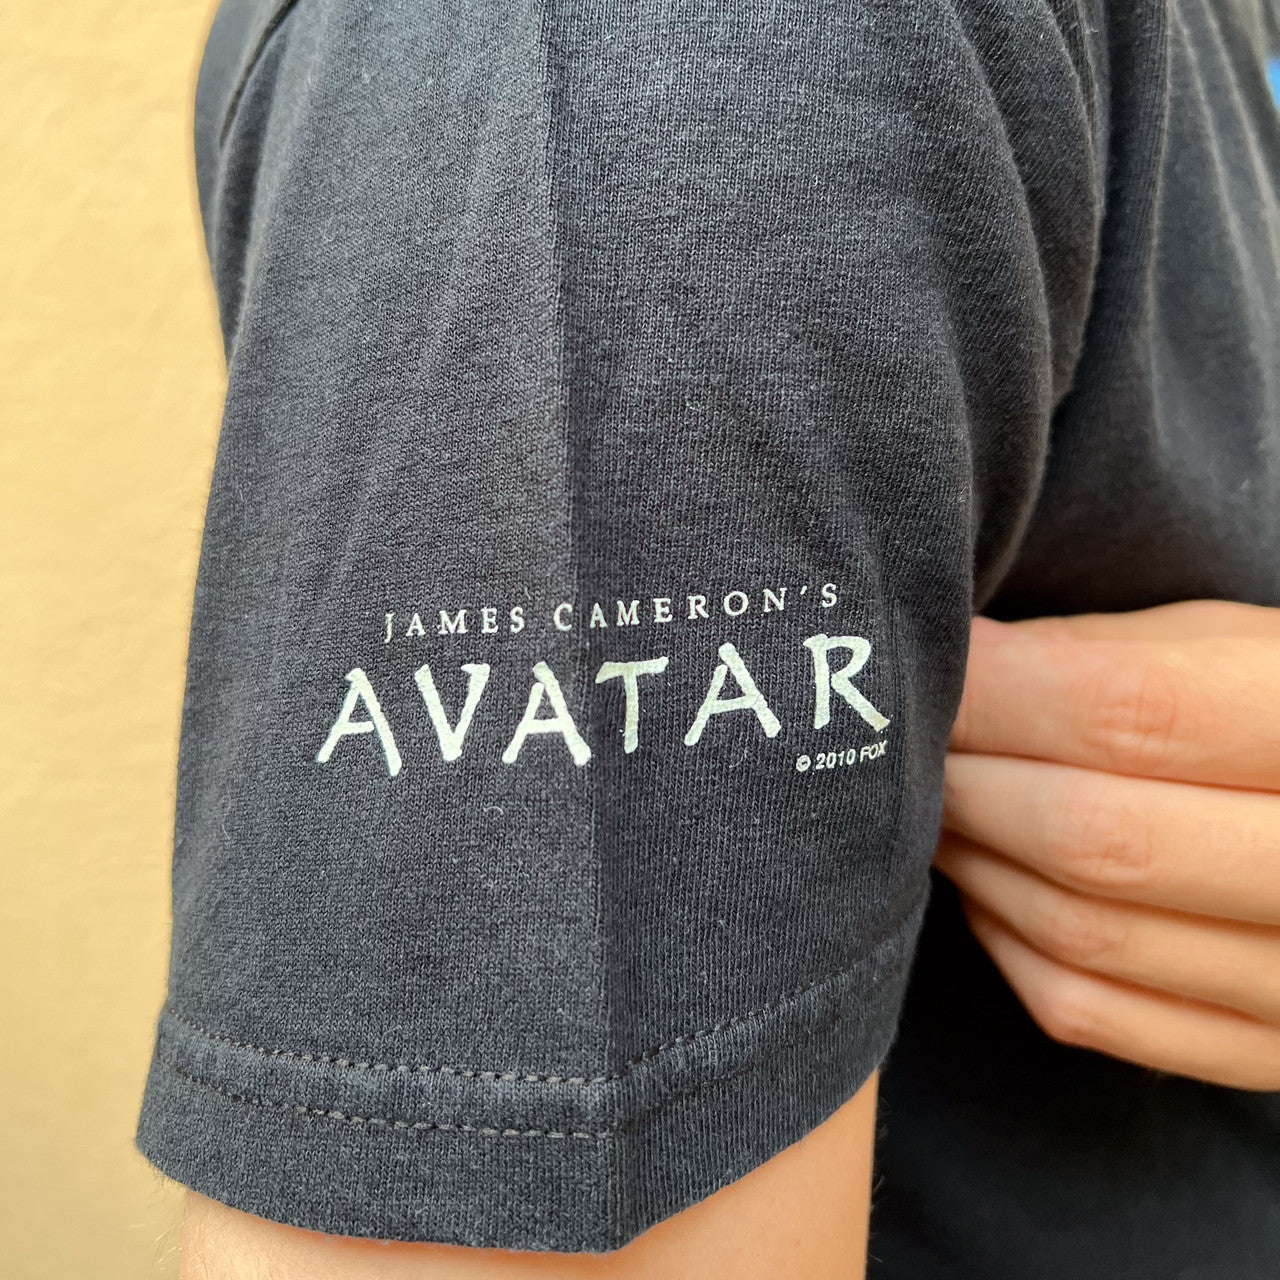 Gildan Avatar 2010 Tshirt